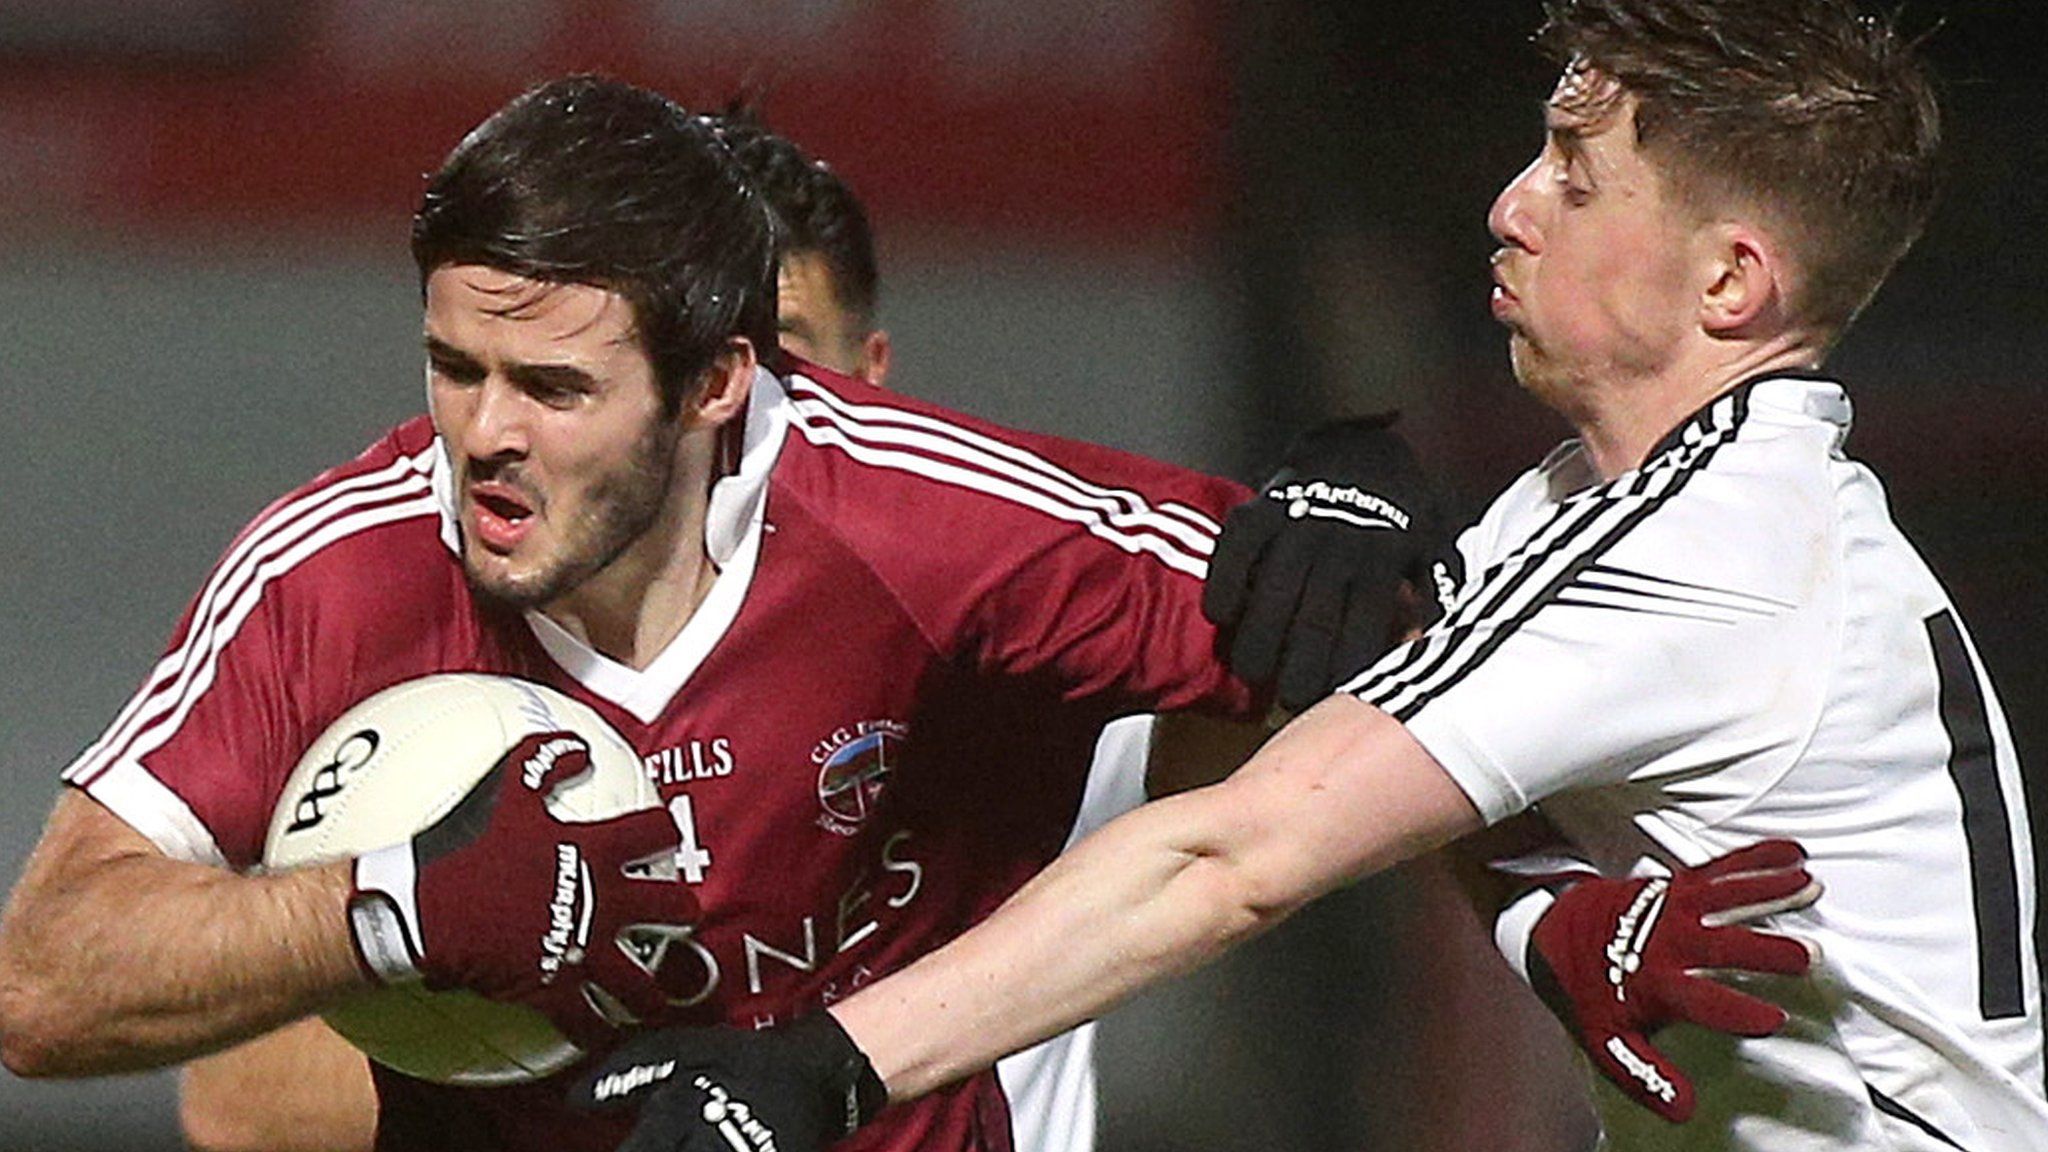 Slaughtneil defender Karl McKaigue is tackled by Omagh's Conan McGrugan